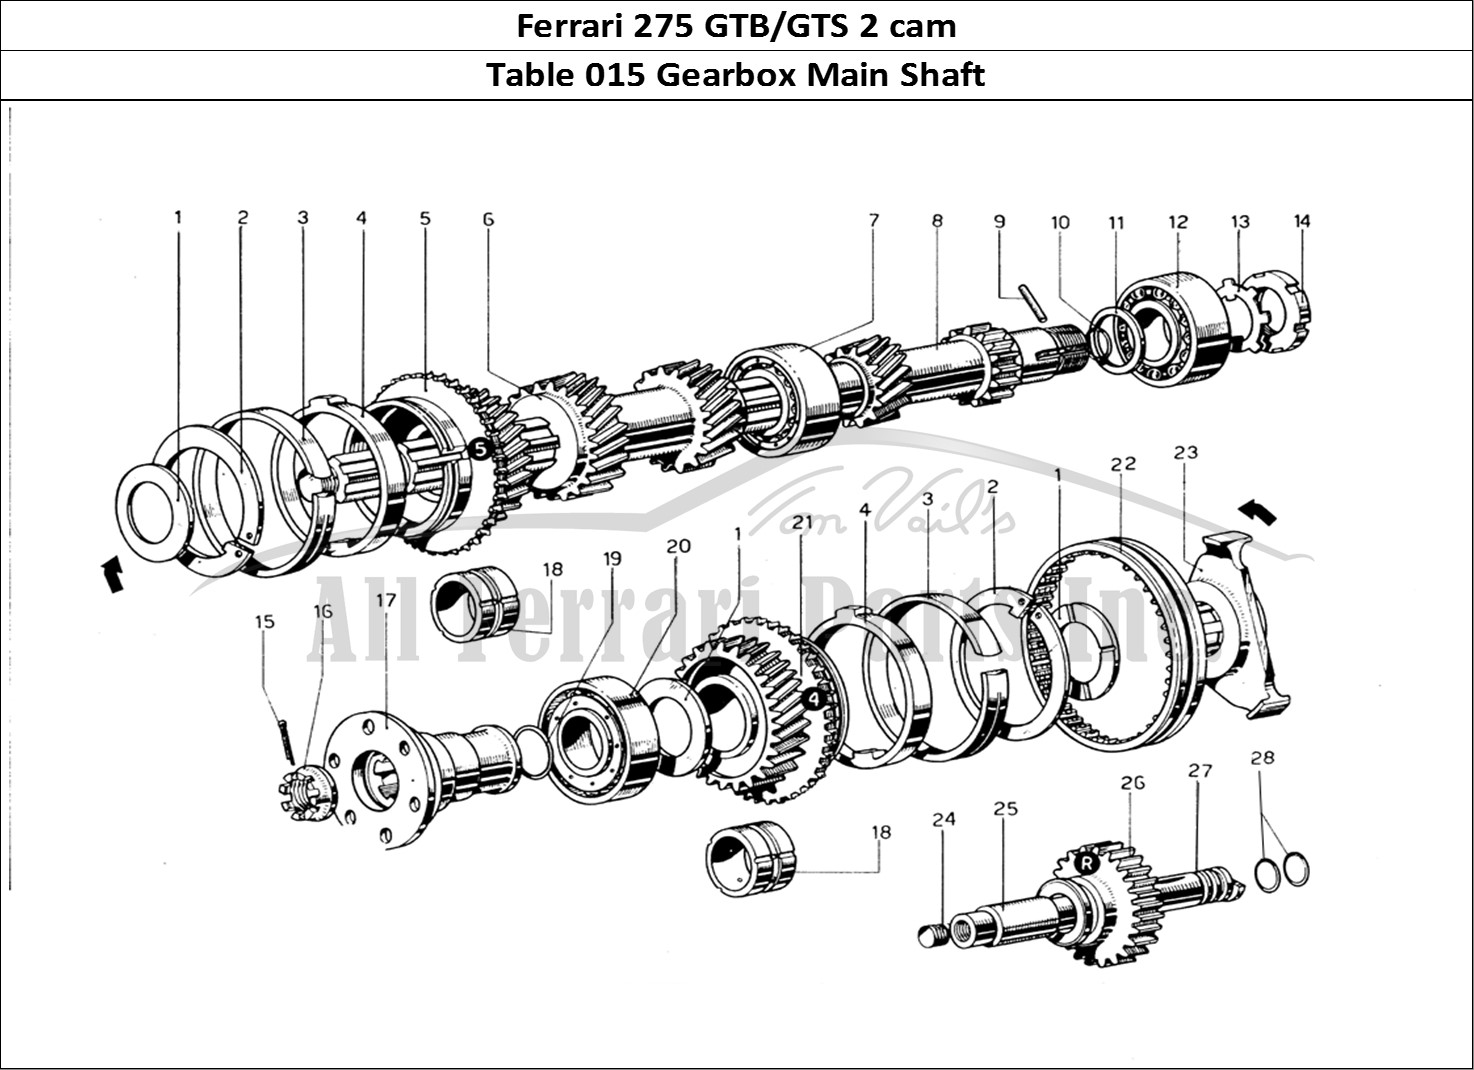 Ferrari Parts Ferrari 275 GTB/GTS 2 cam Page 015 Primaty Shaft